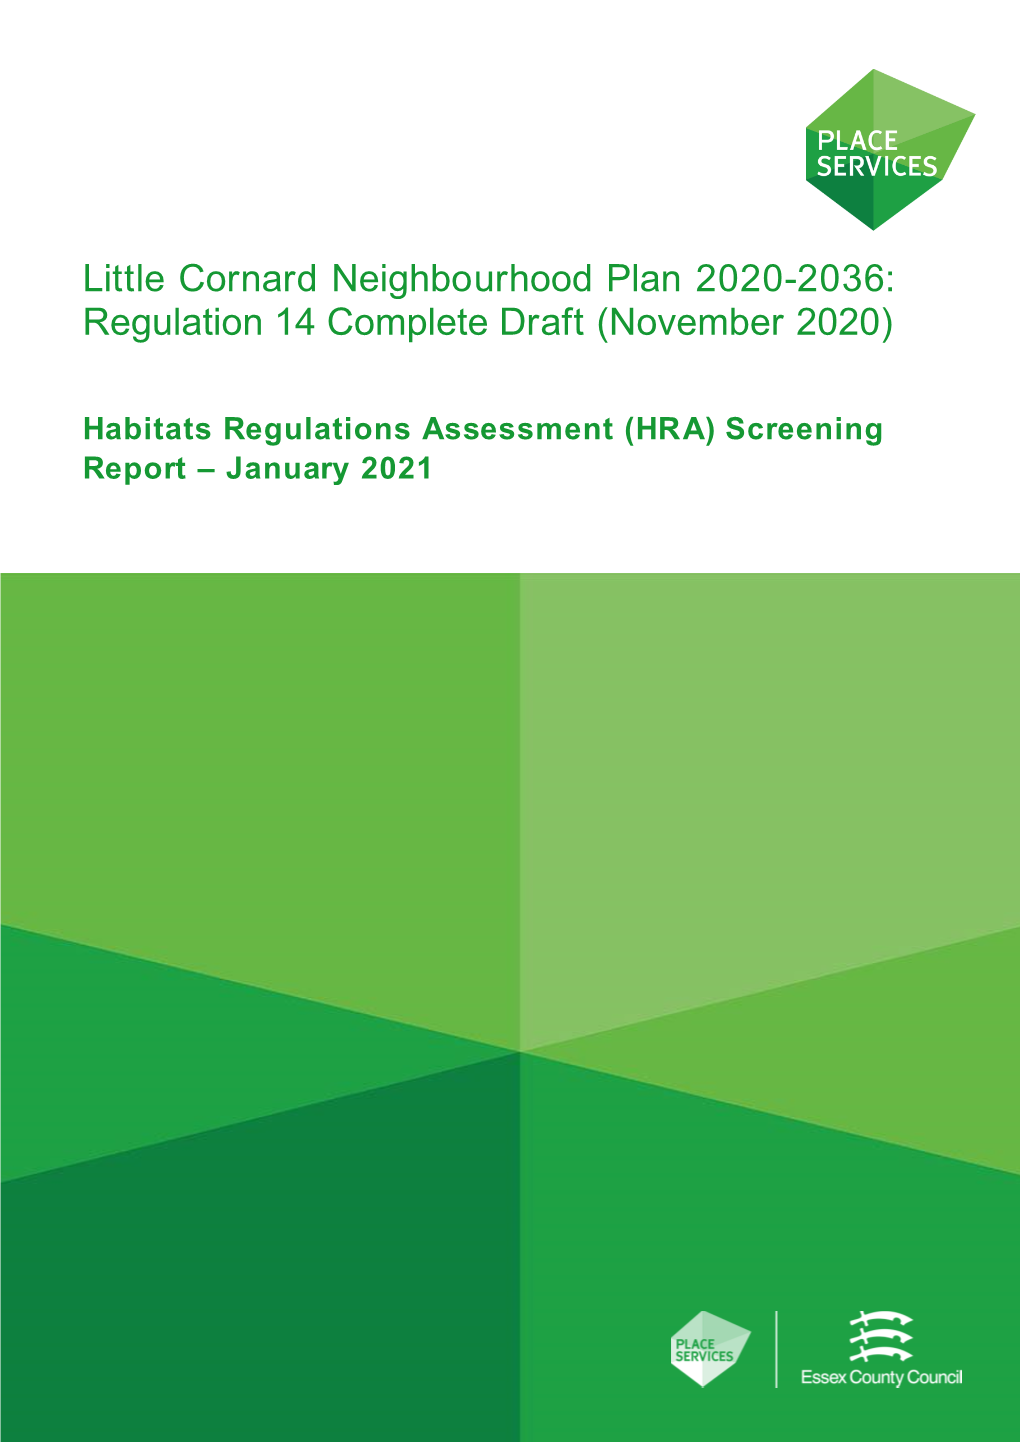 Read the Little Cornard NDP HRA Screening Report